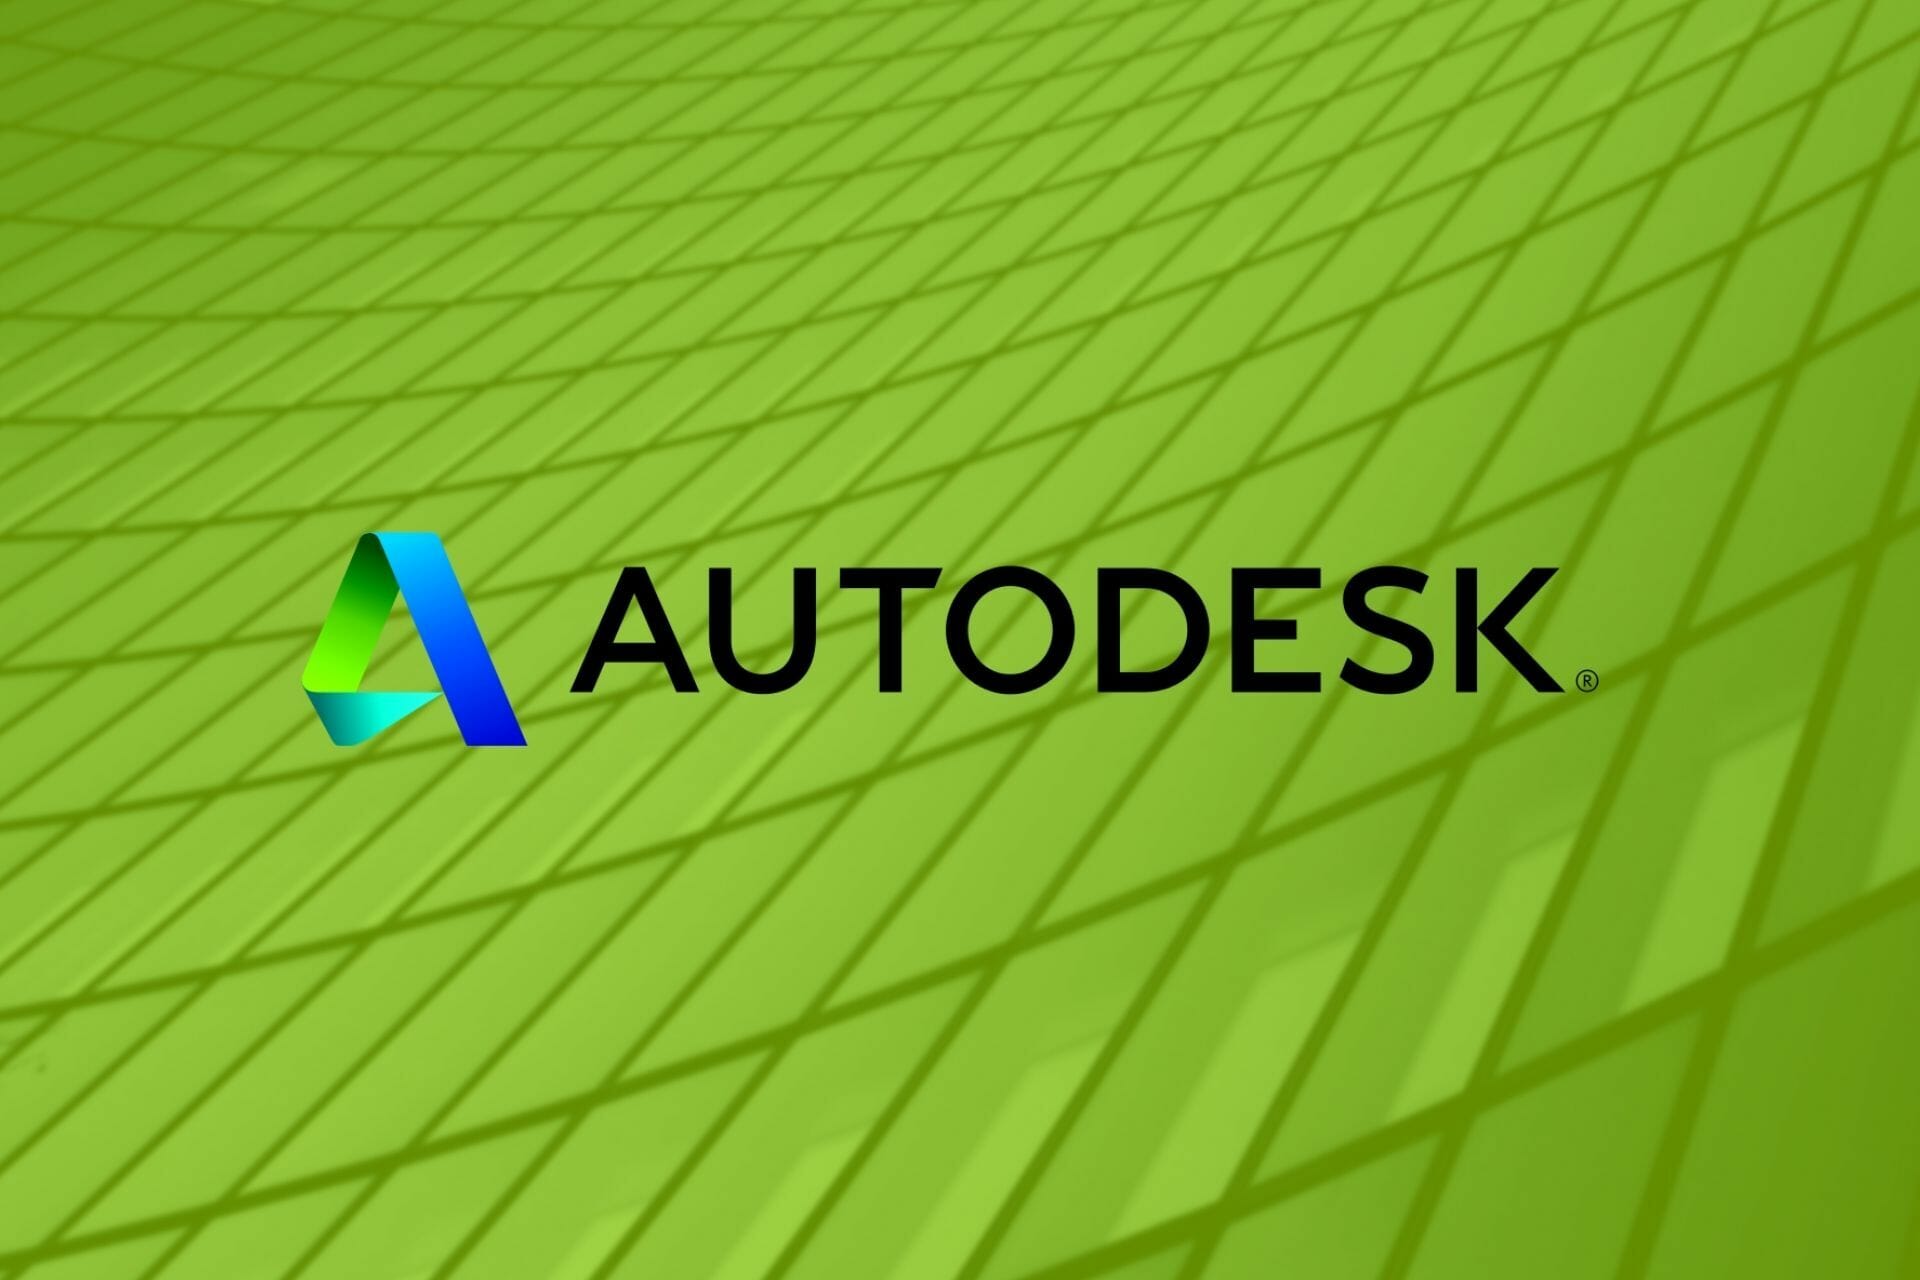 autodesk featured image